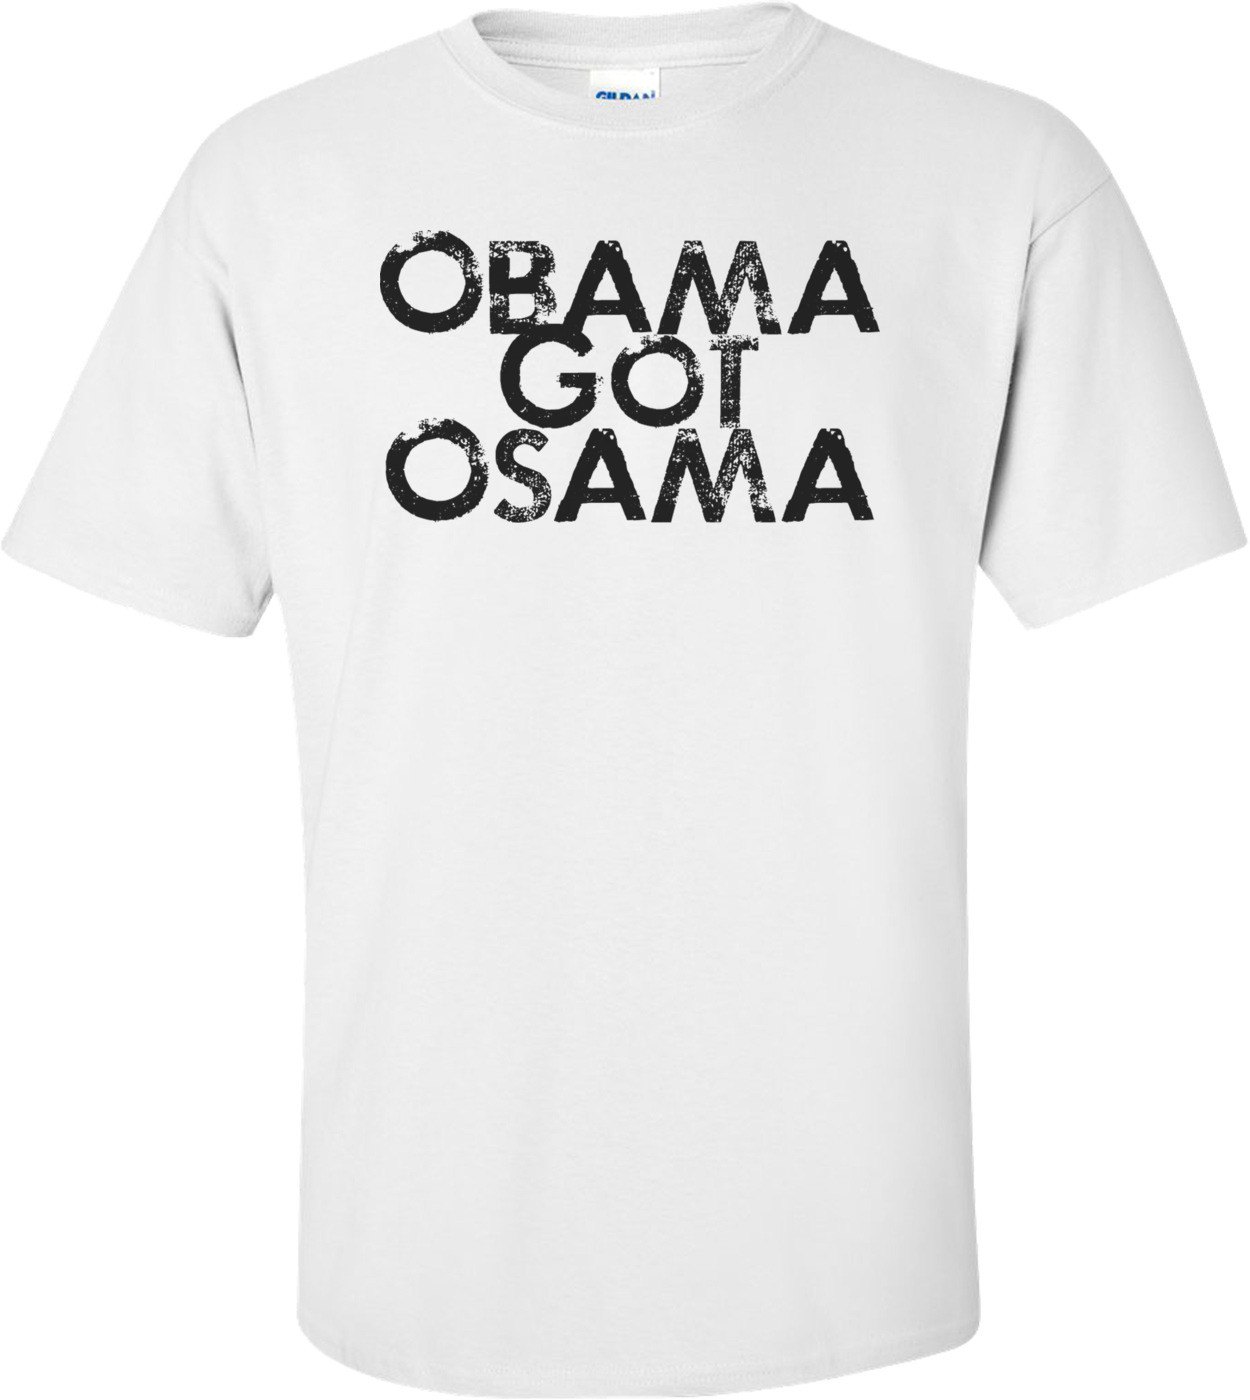 Obama Got Osama Shirt